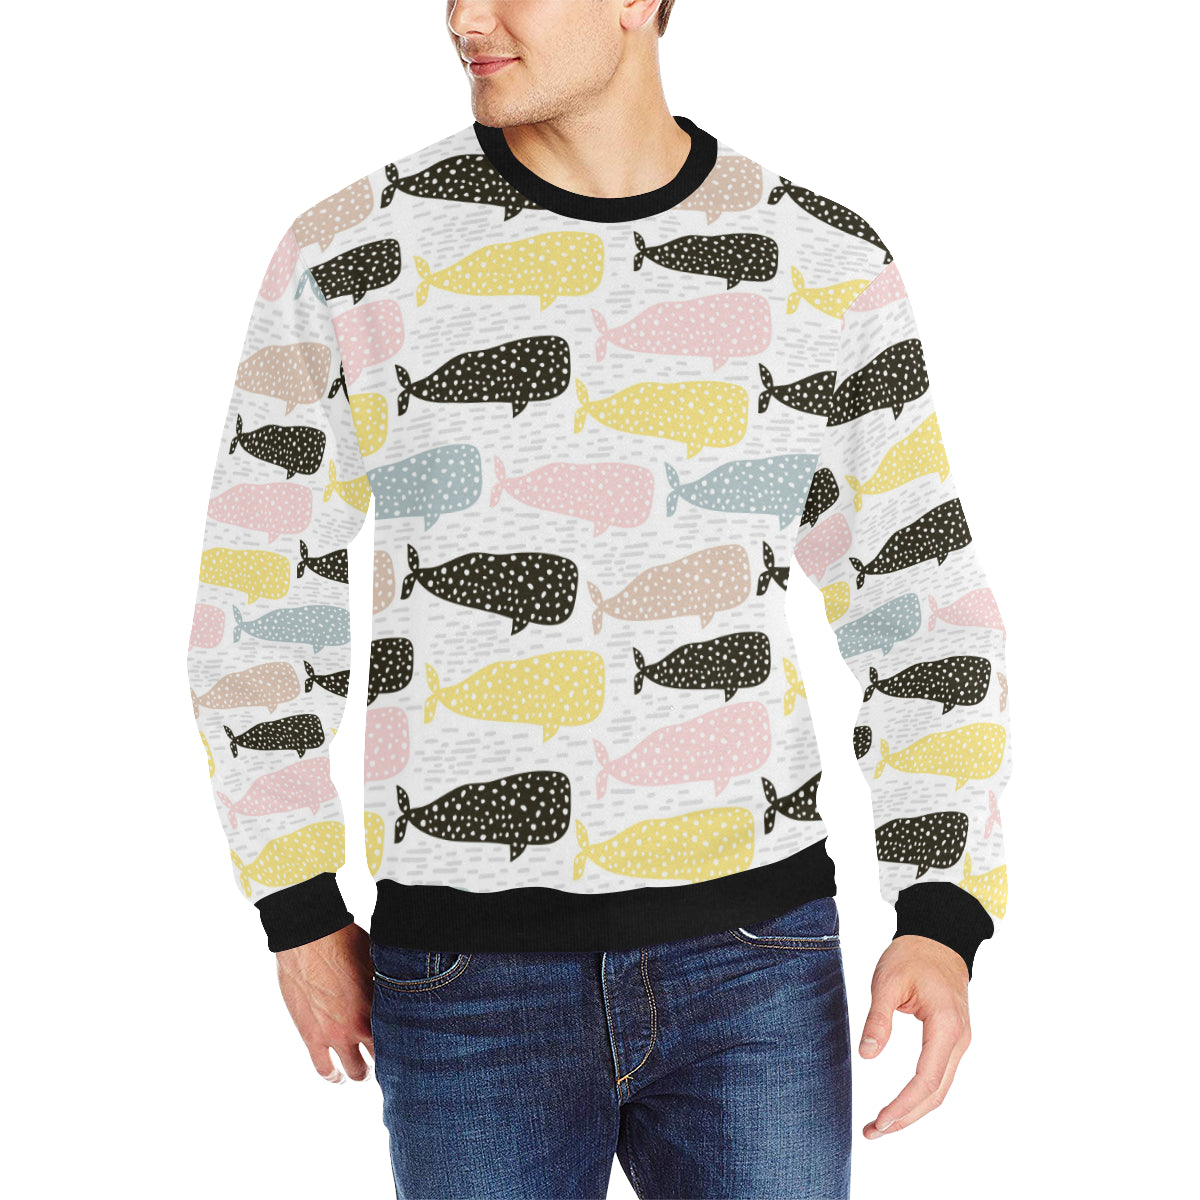 Whale dot pattern Men’s Crew Neck Sweatshirt